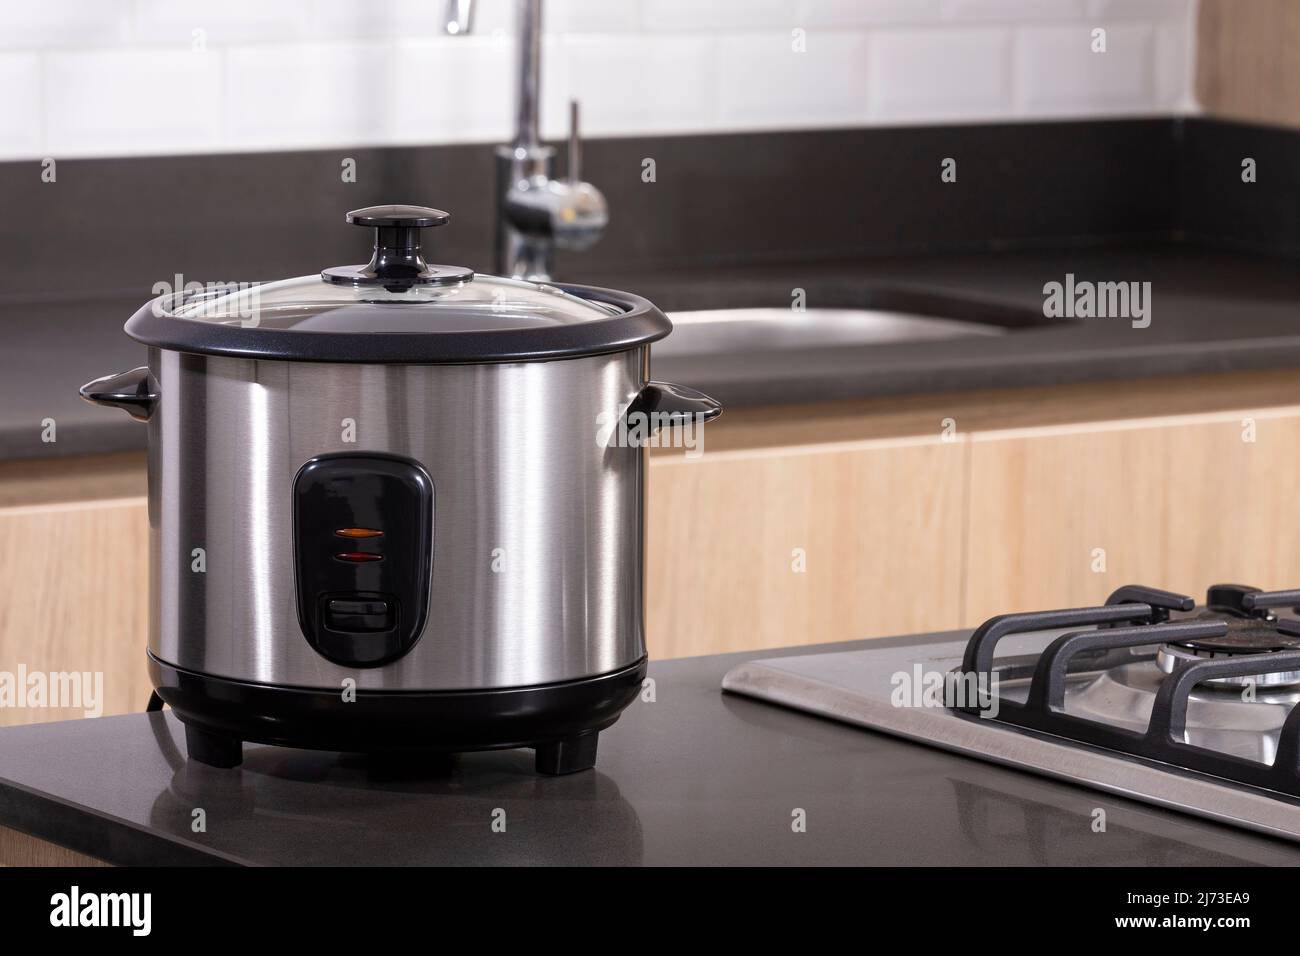 https://c8.alamy.com/comp/2J73EA9/modern-electric-rice-cooker-in-the-kitchen-2J73EA9.jpg